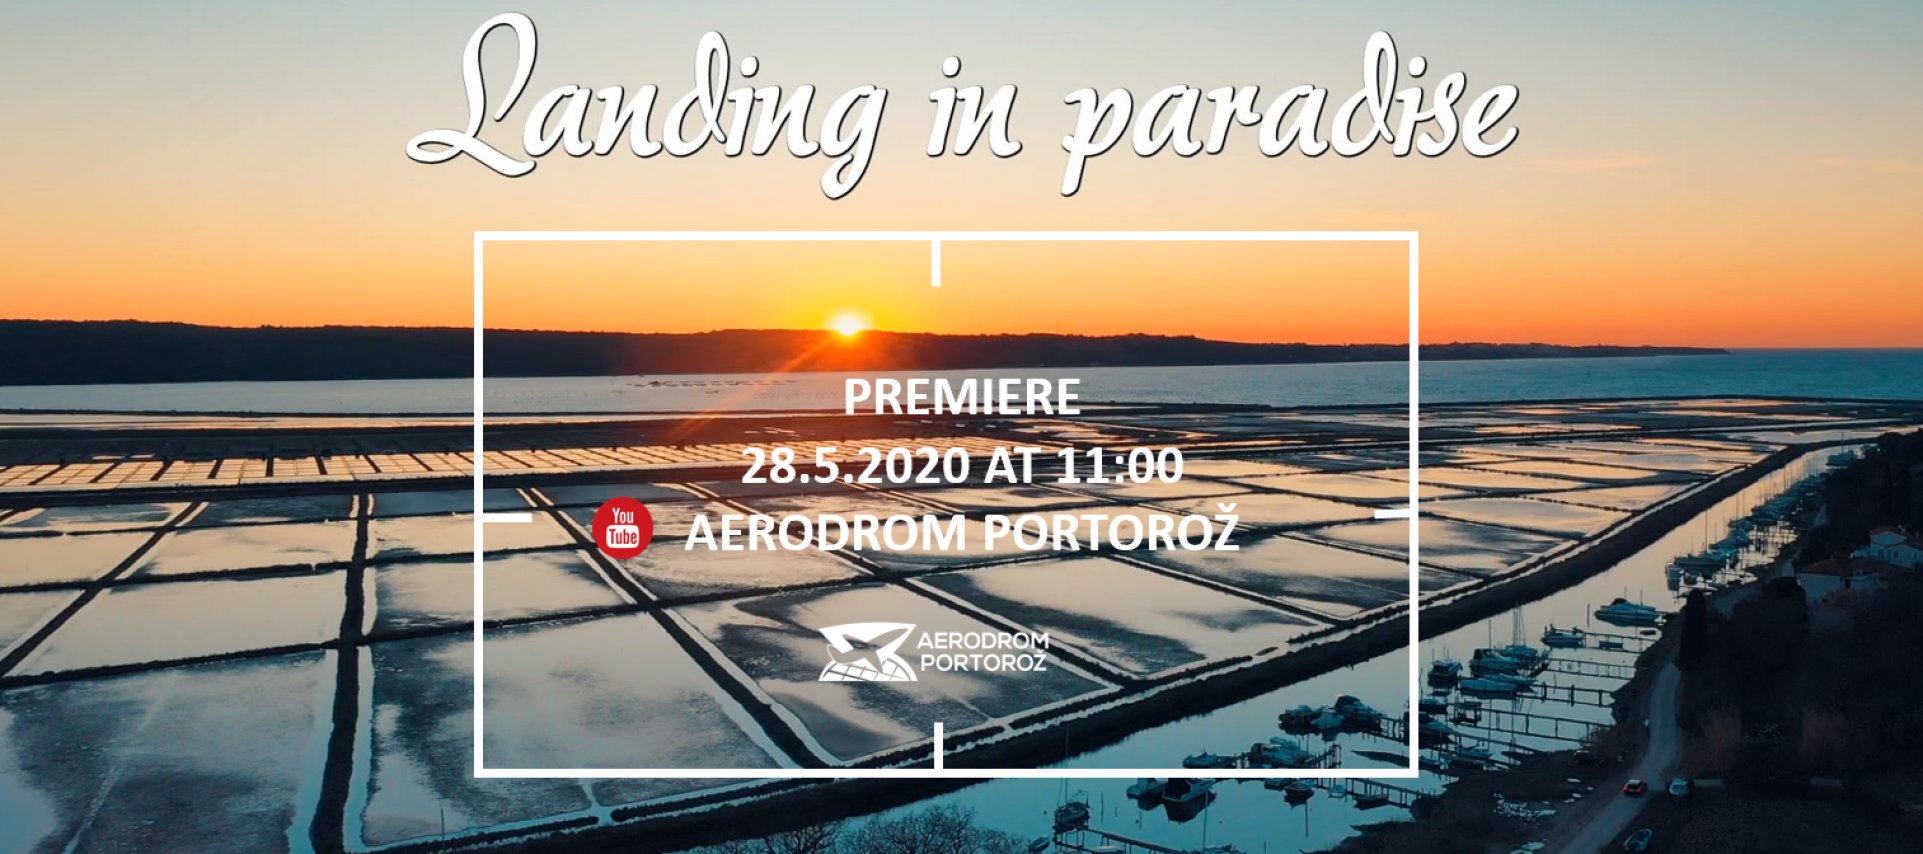 Landing in paradise - PREMIERE